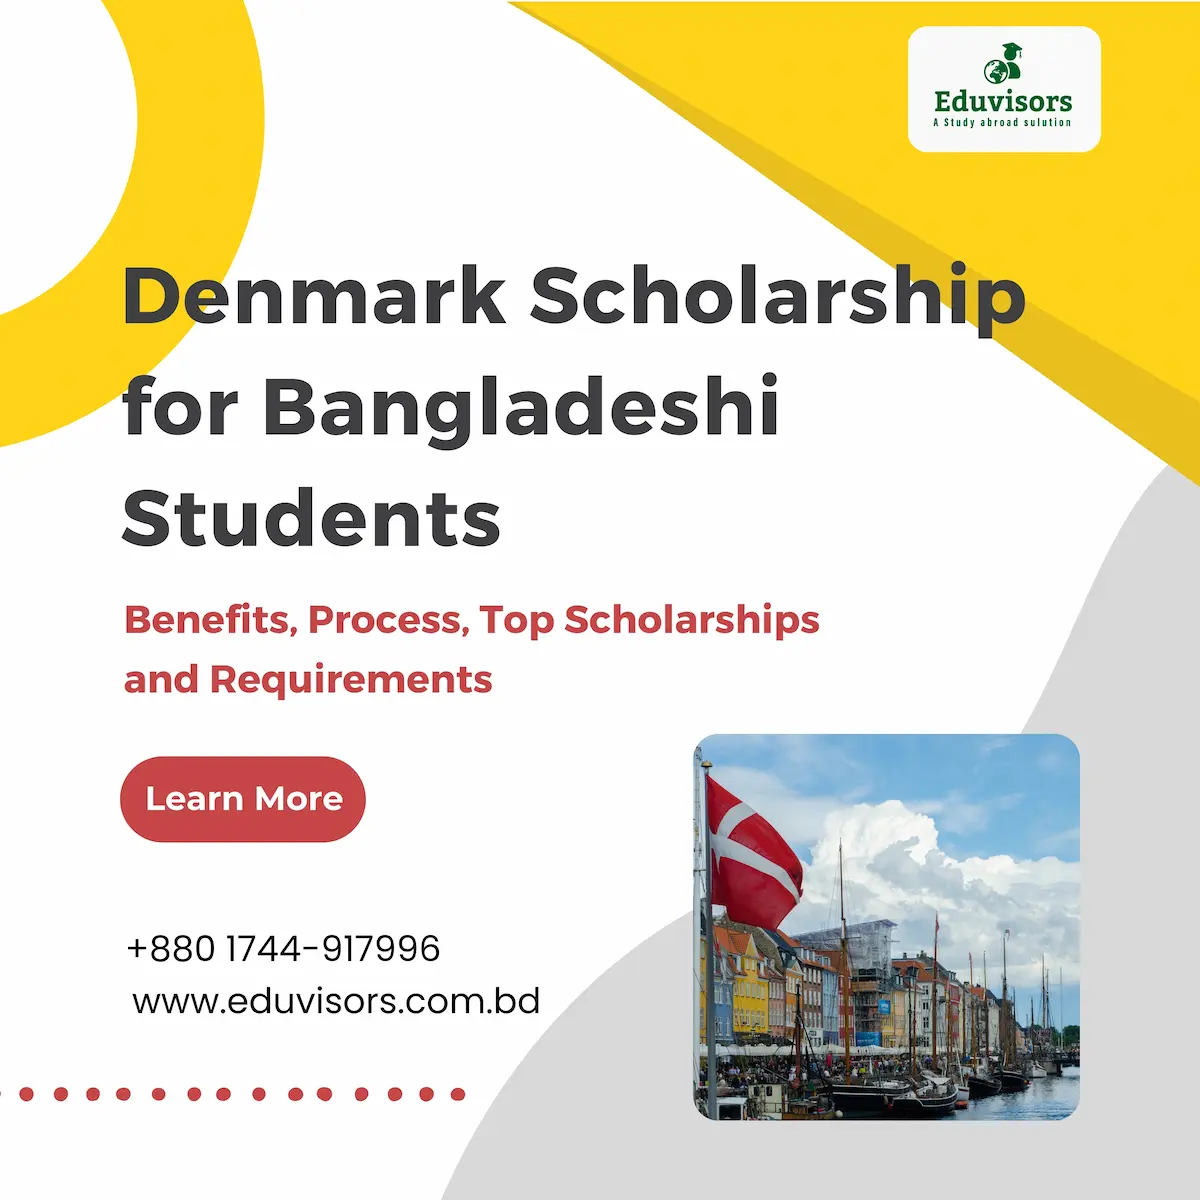 Denmark Scholarship for Bangladeshi Students